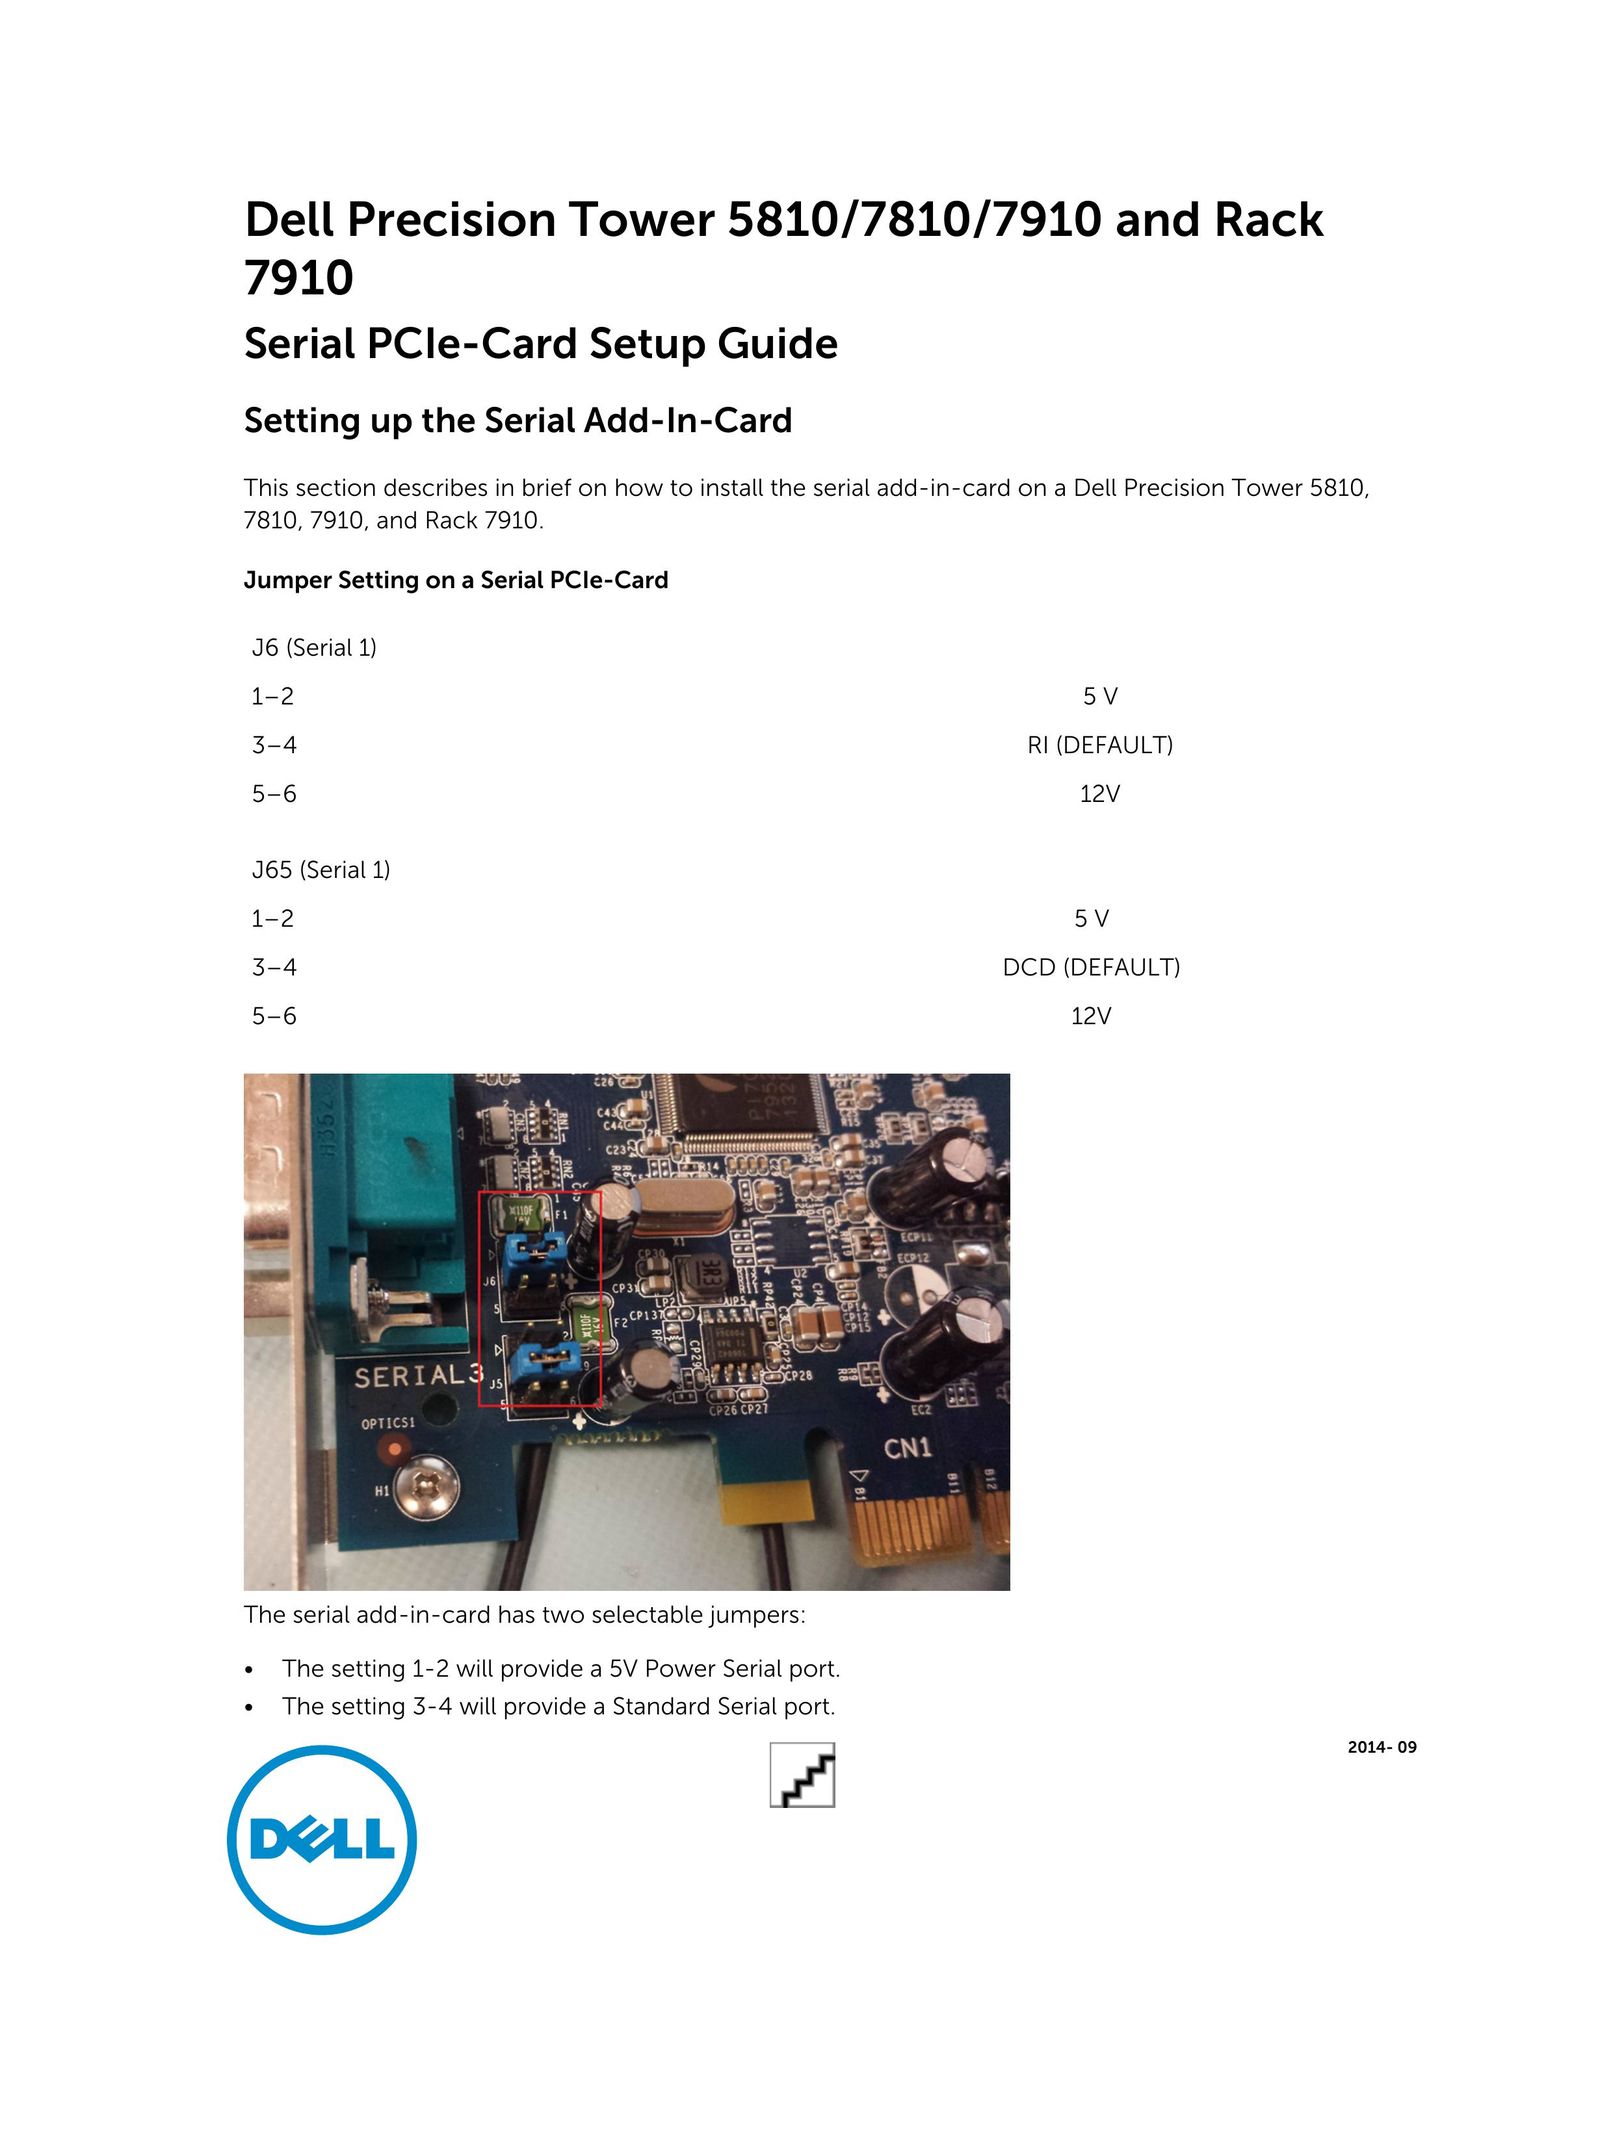 Dell 5810 Computer Hardware User Manual